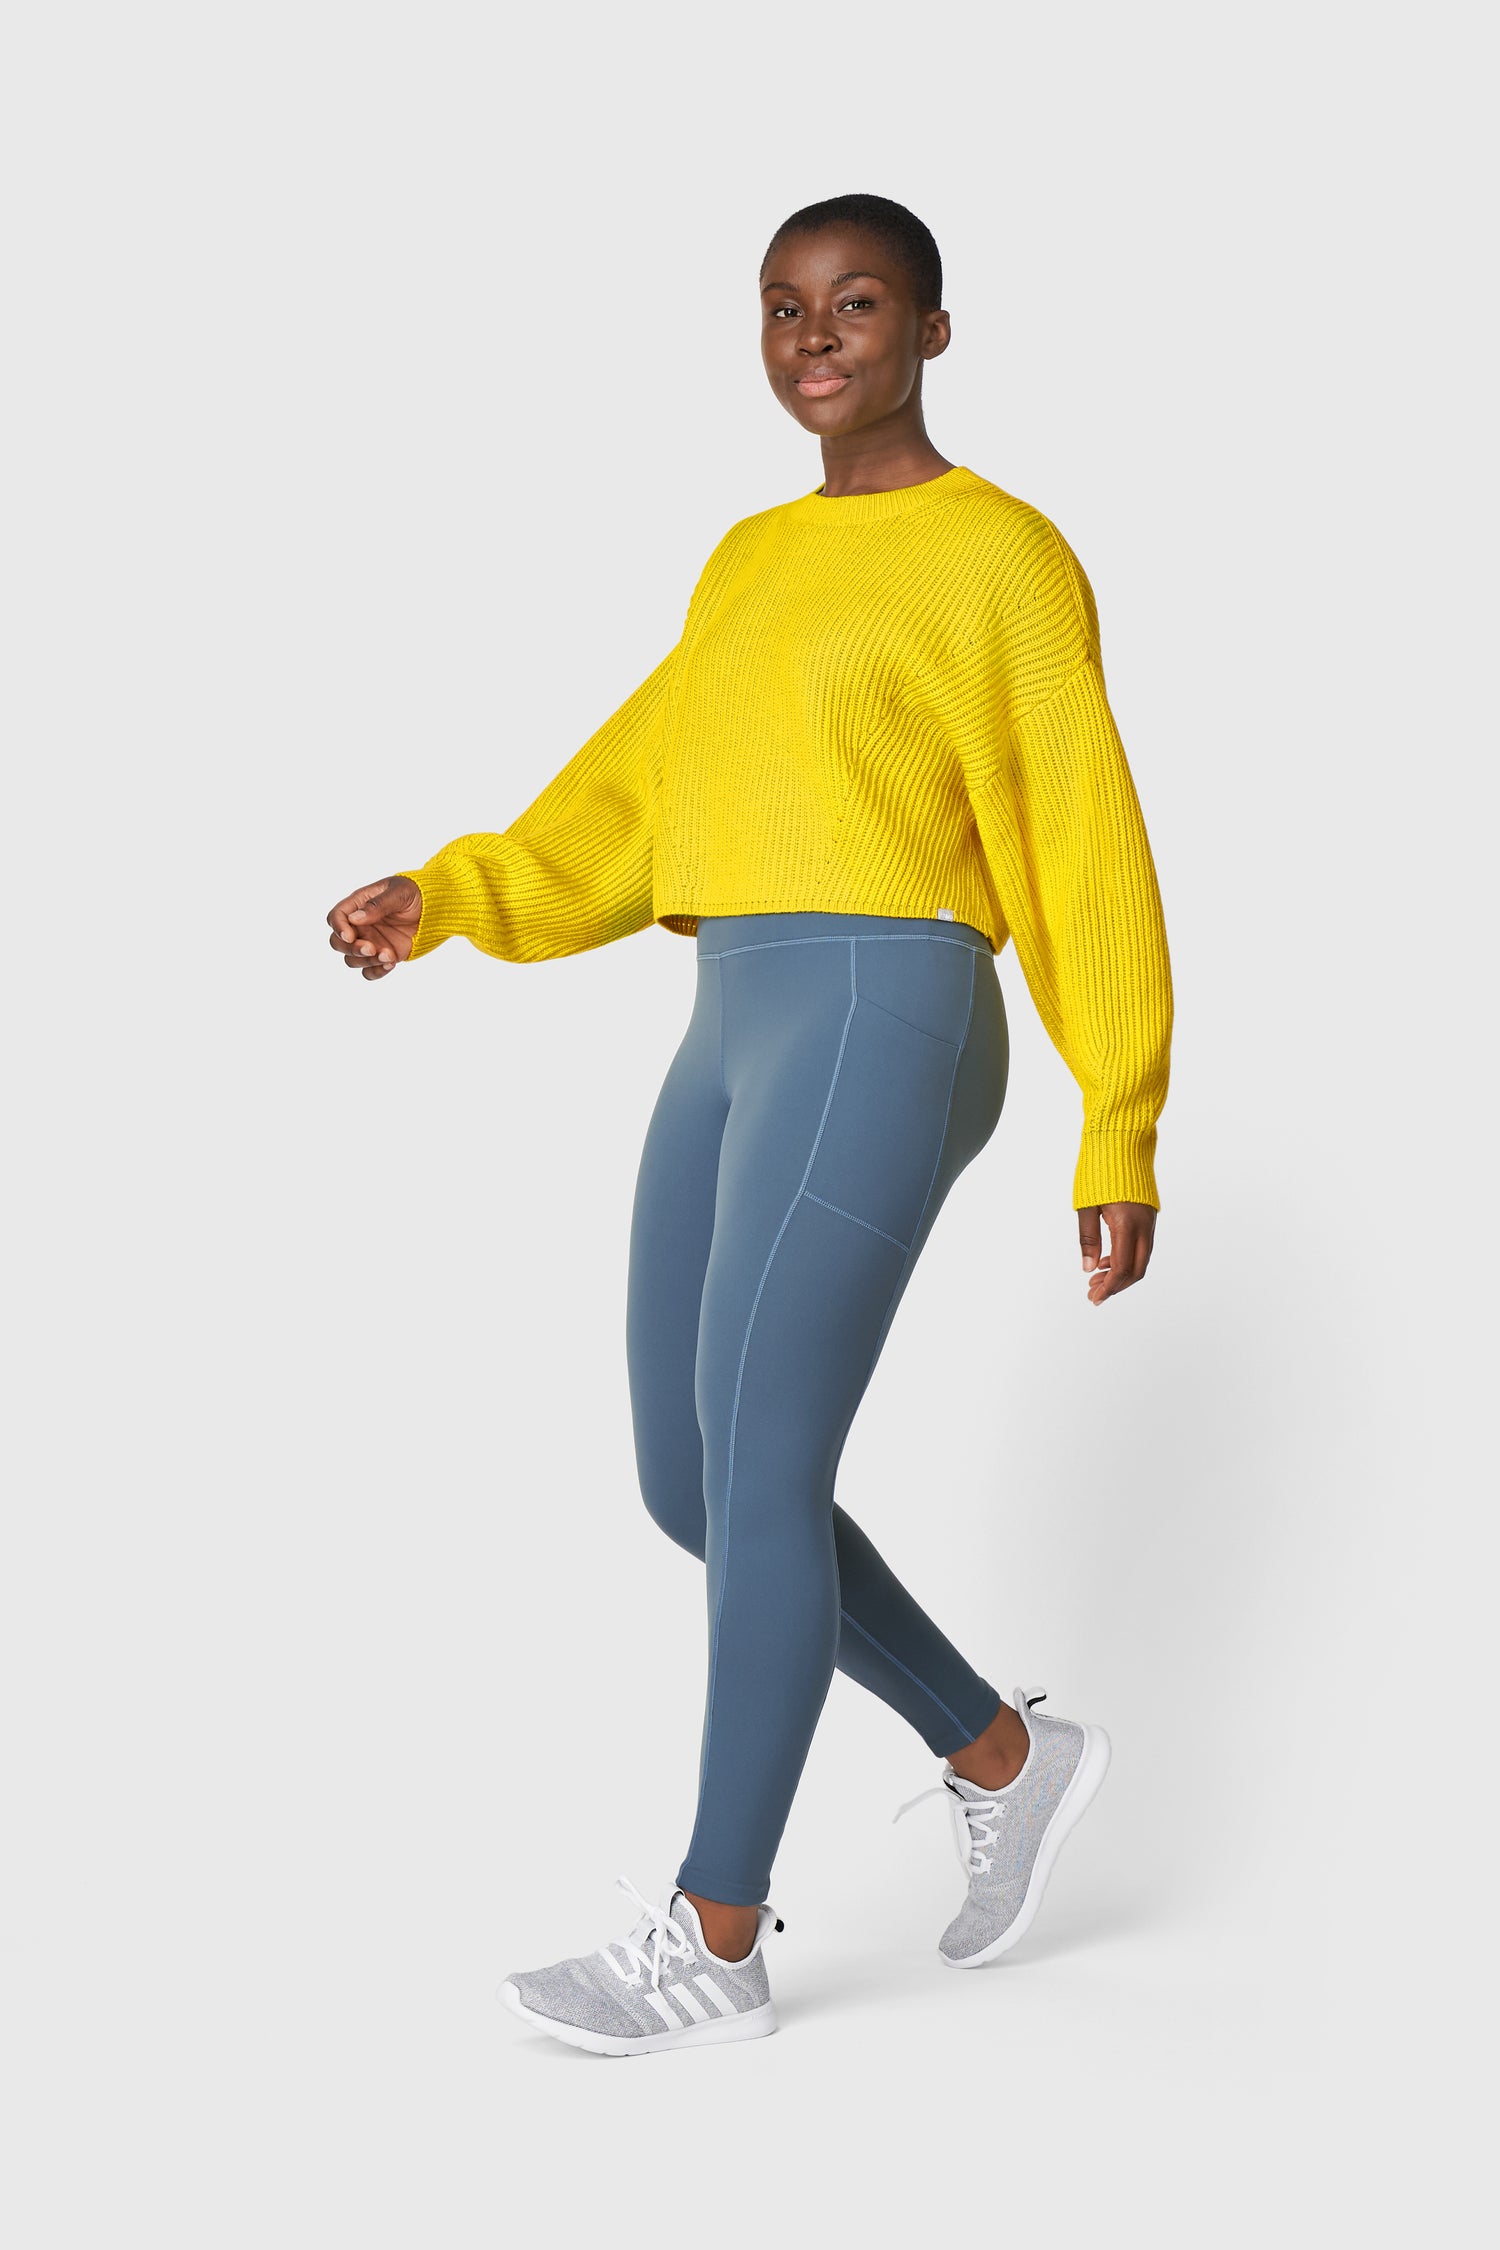 Women's Cropped Sweater